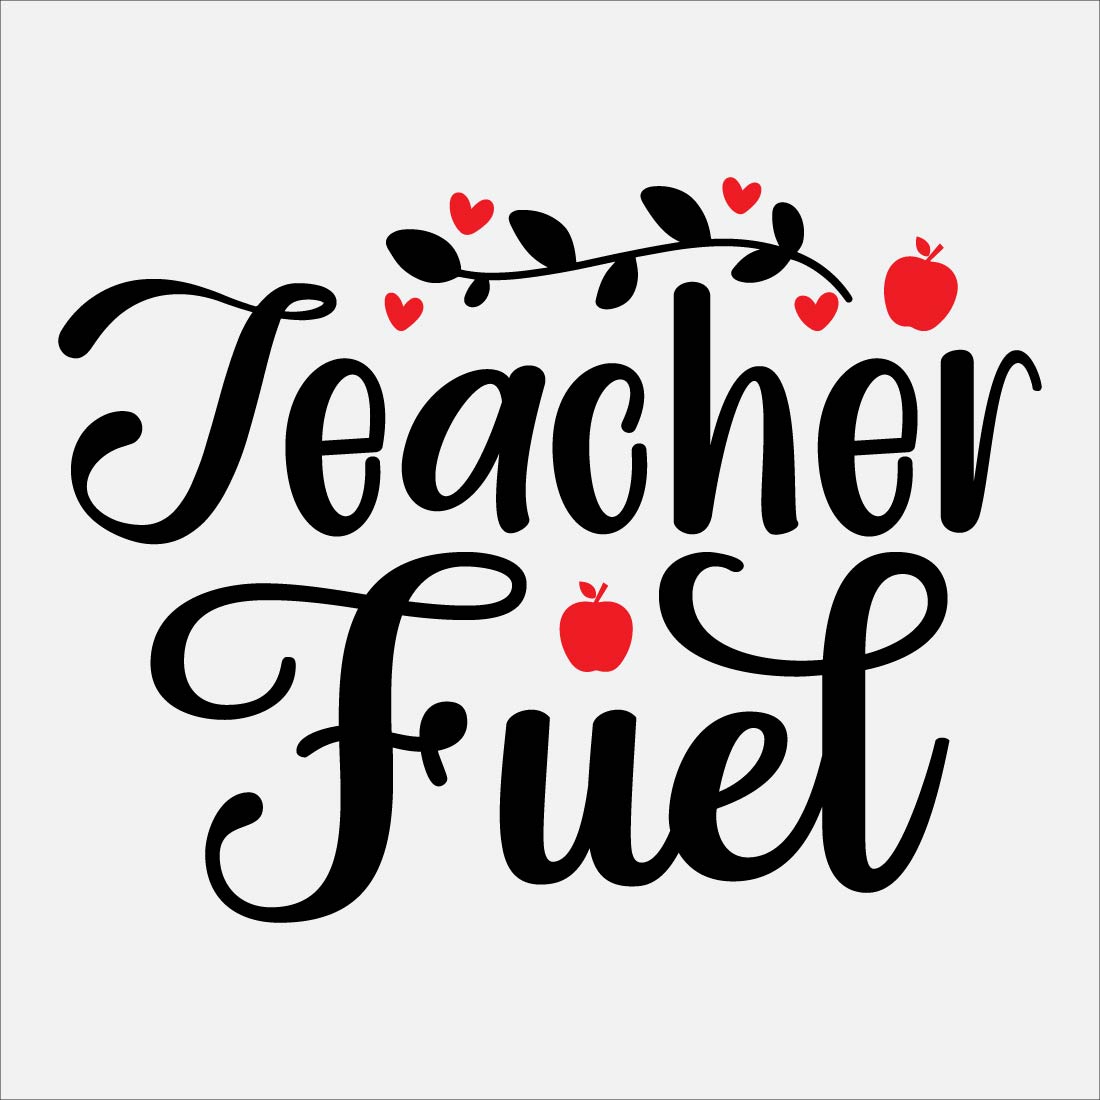 Teacher Fuel preview image.